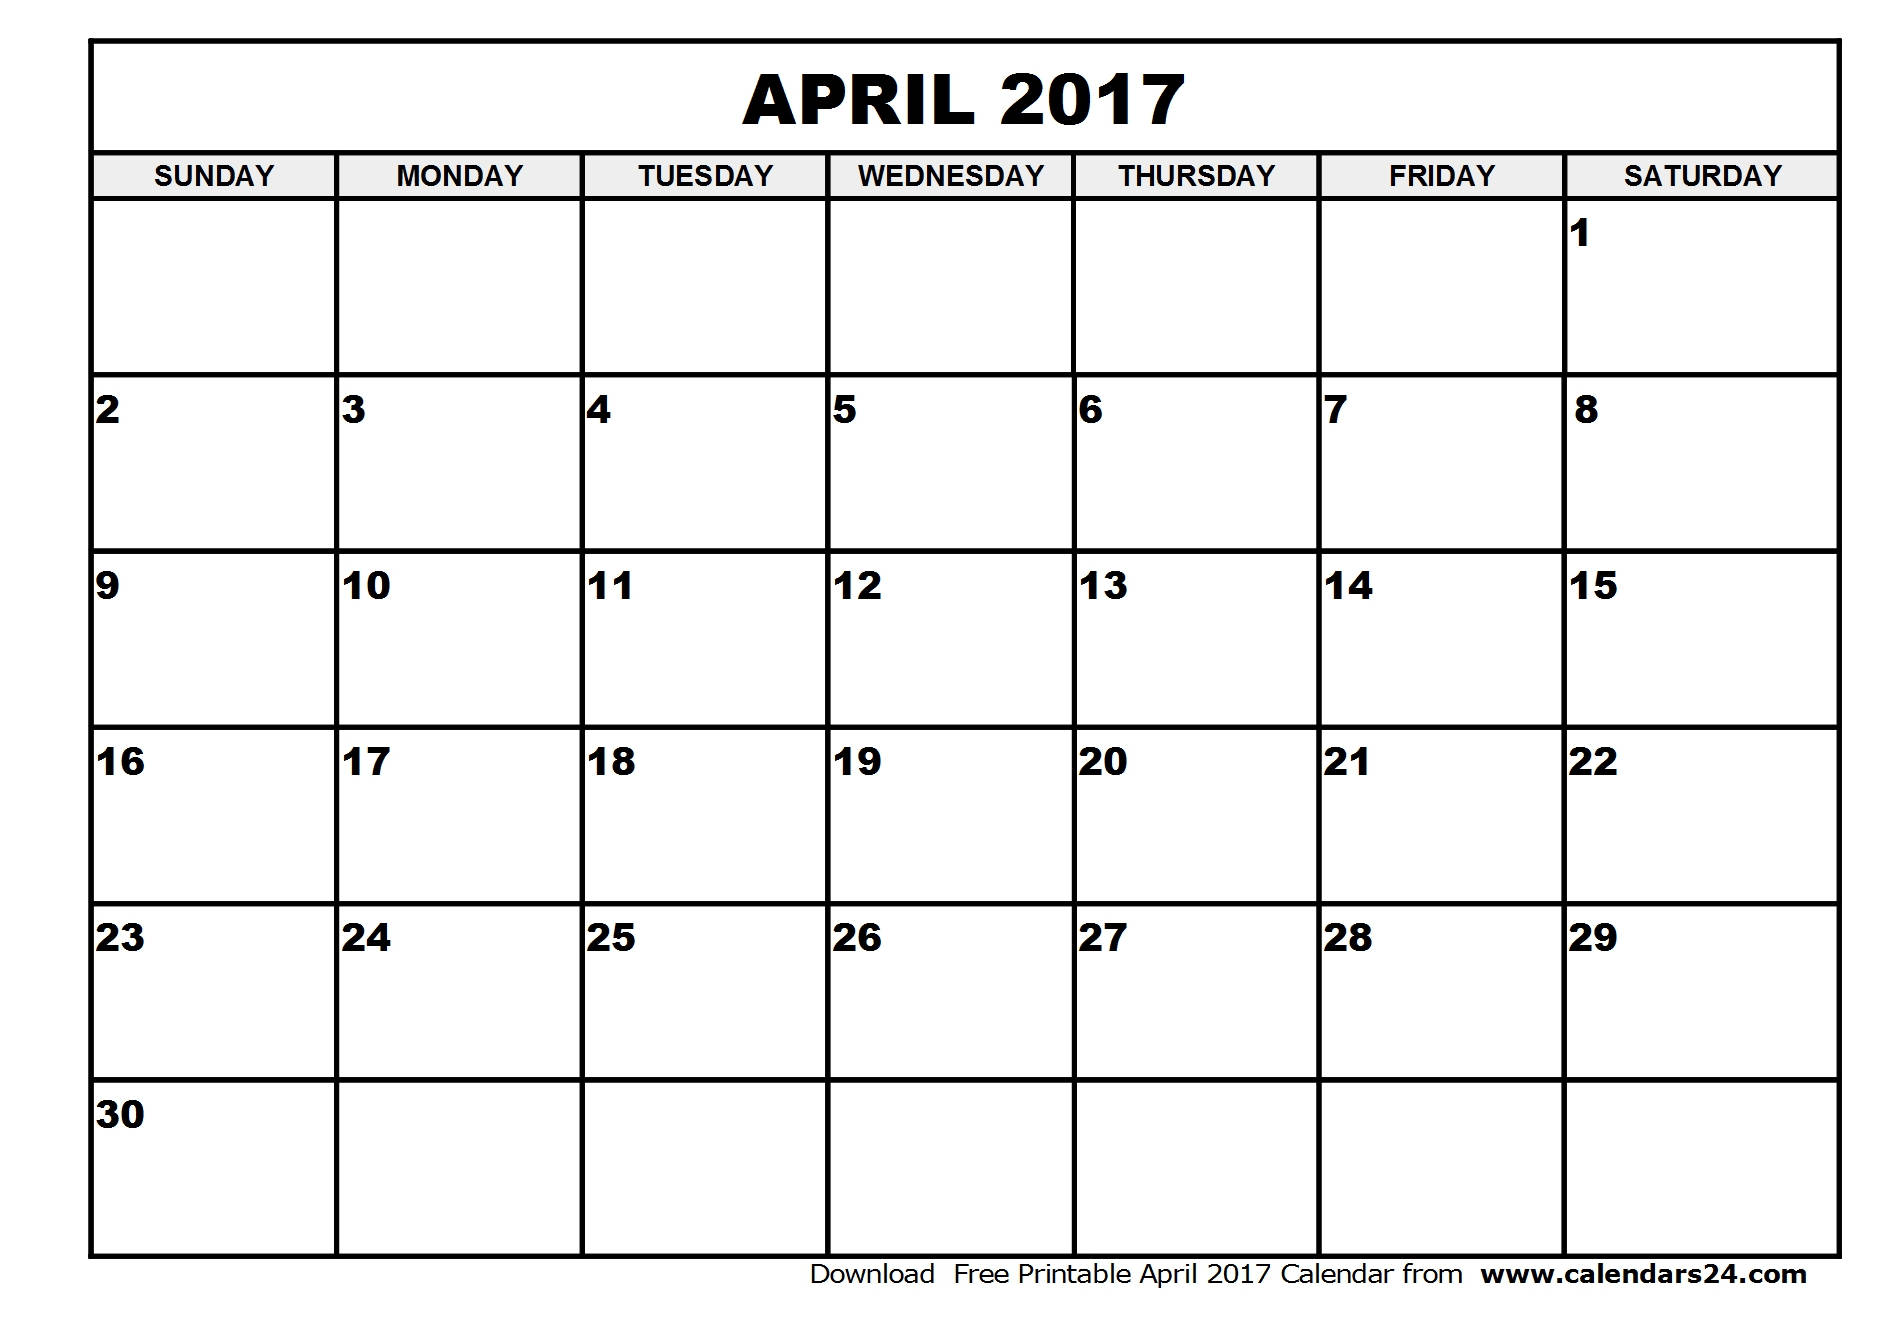 April 2017 Calendar & May 2017 Calendar